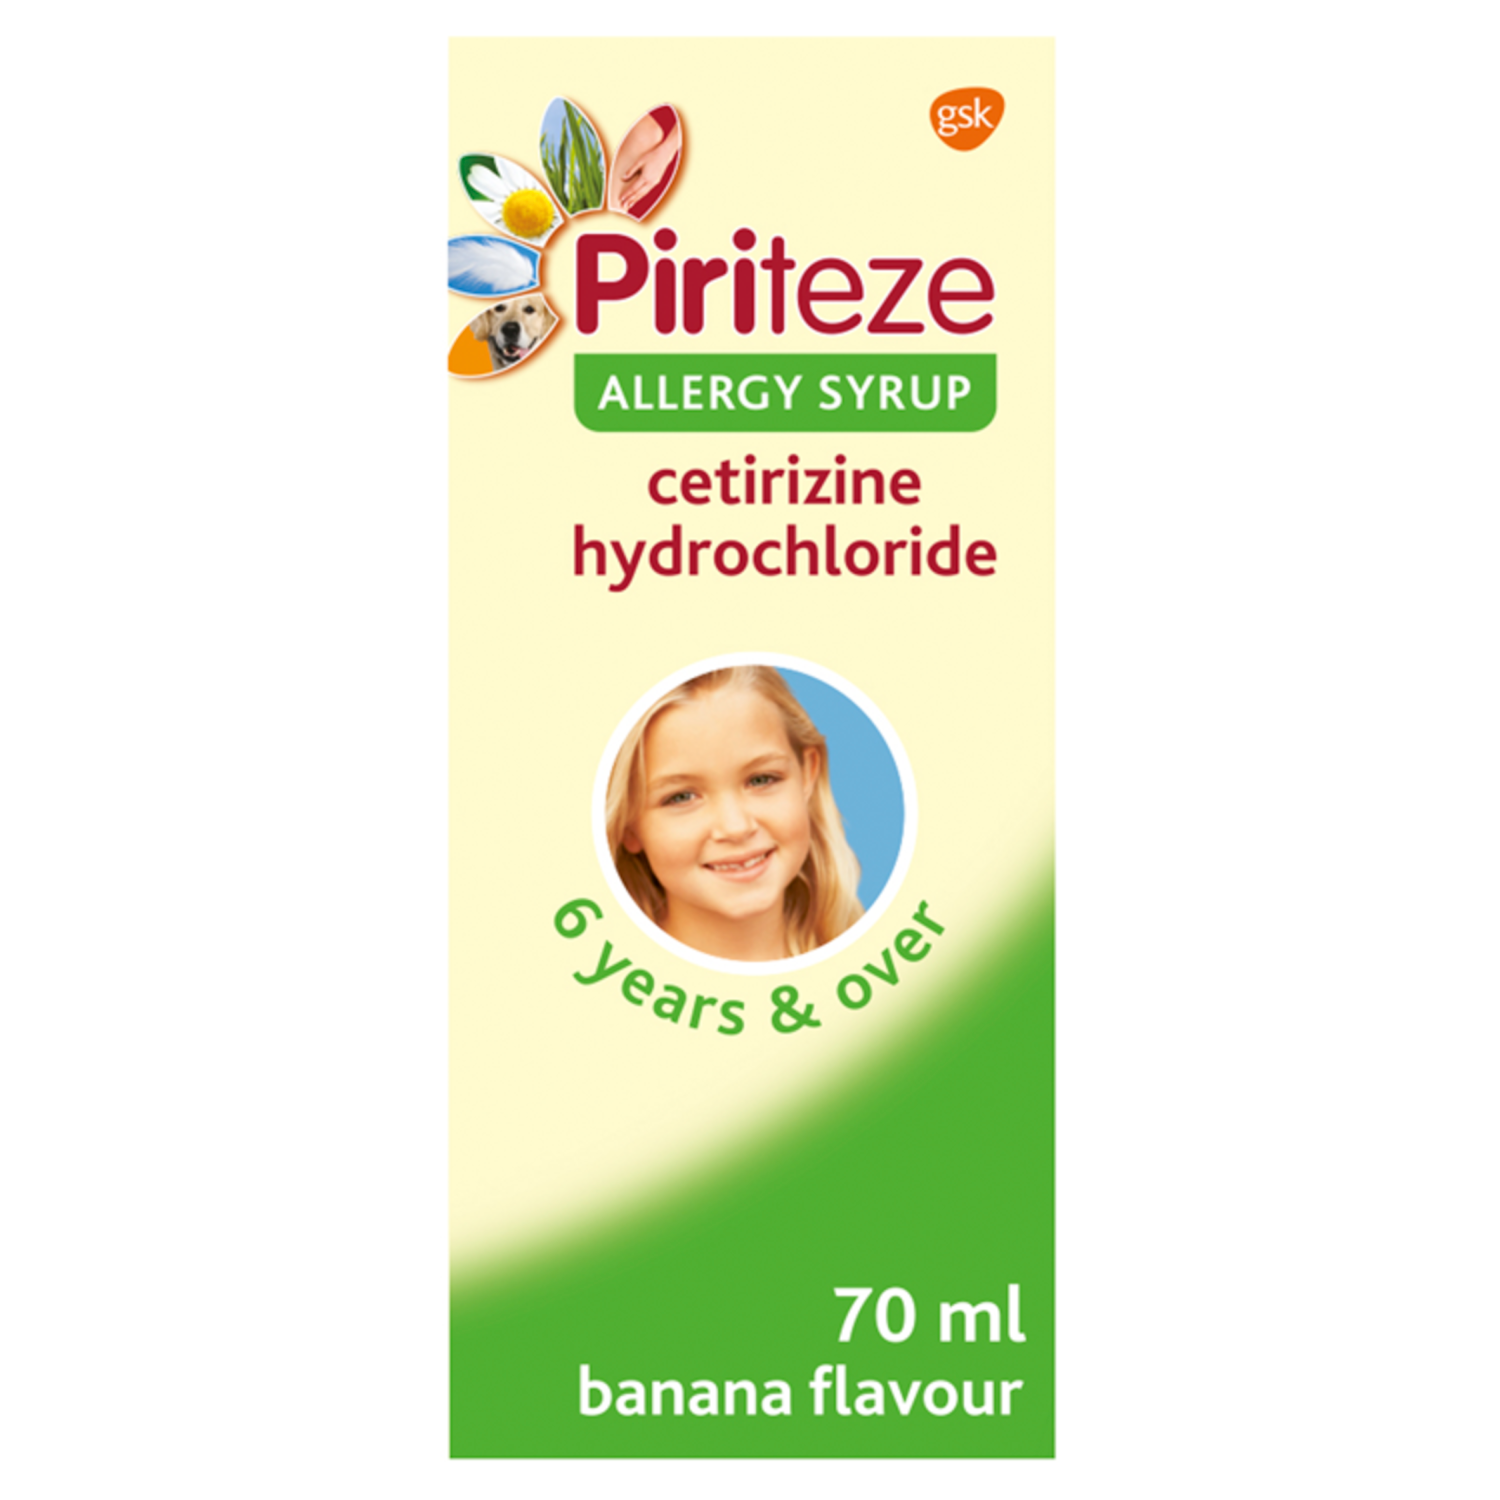 Piriteze Allergy Relief Syrup Sugar Free Banana Flavour 70ml